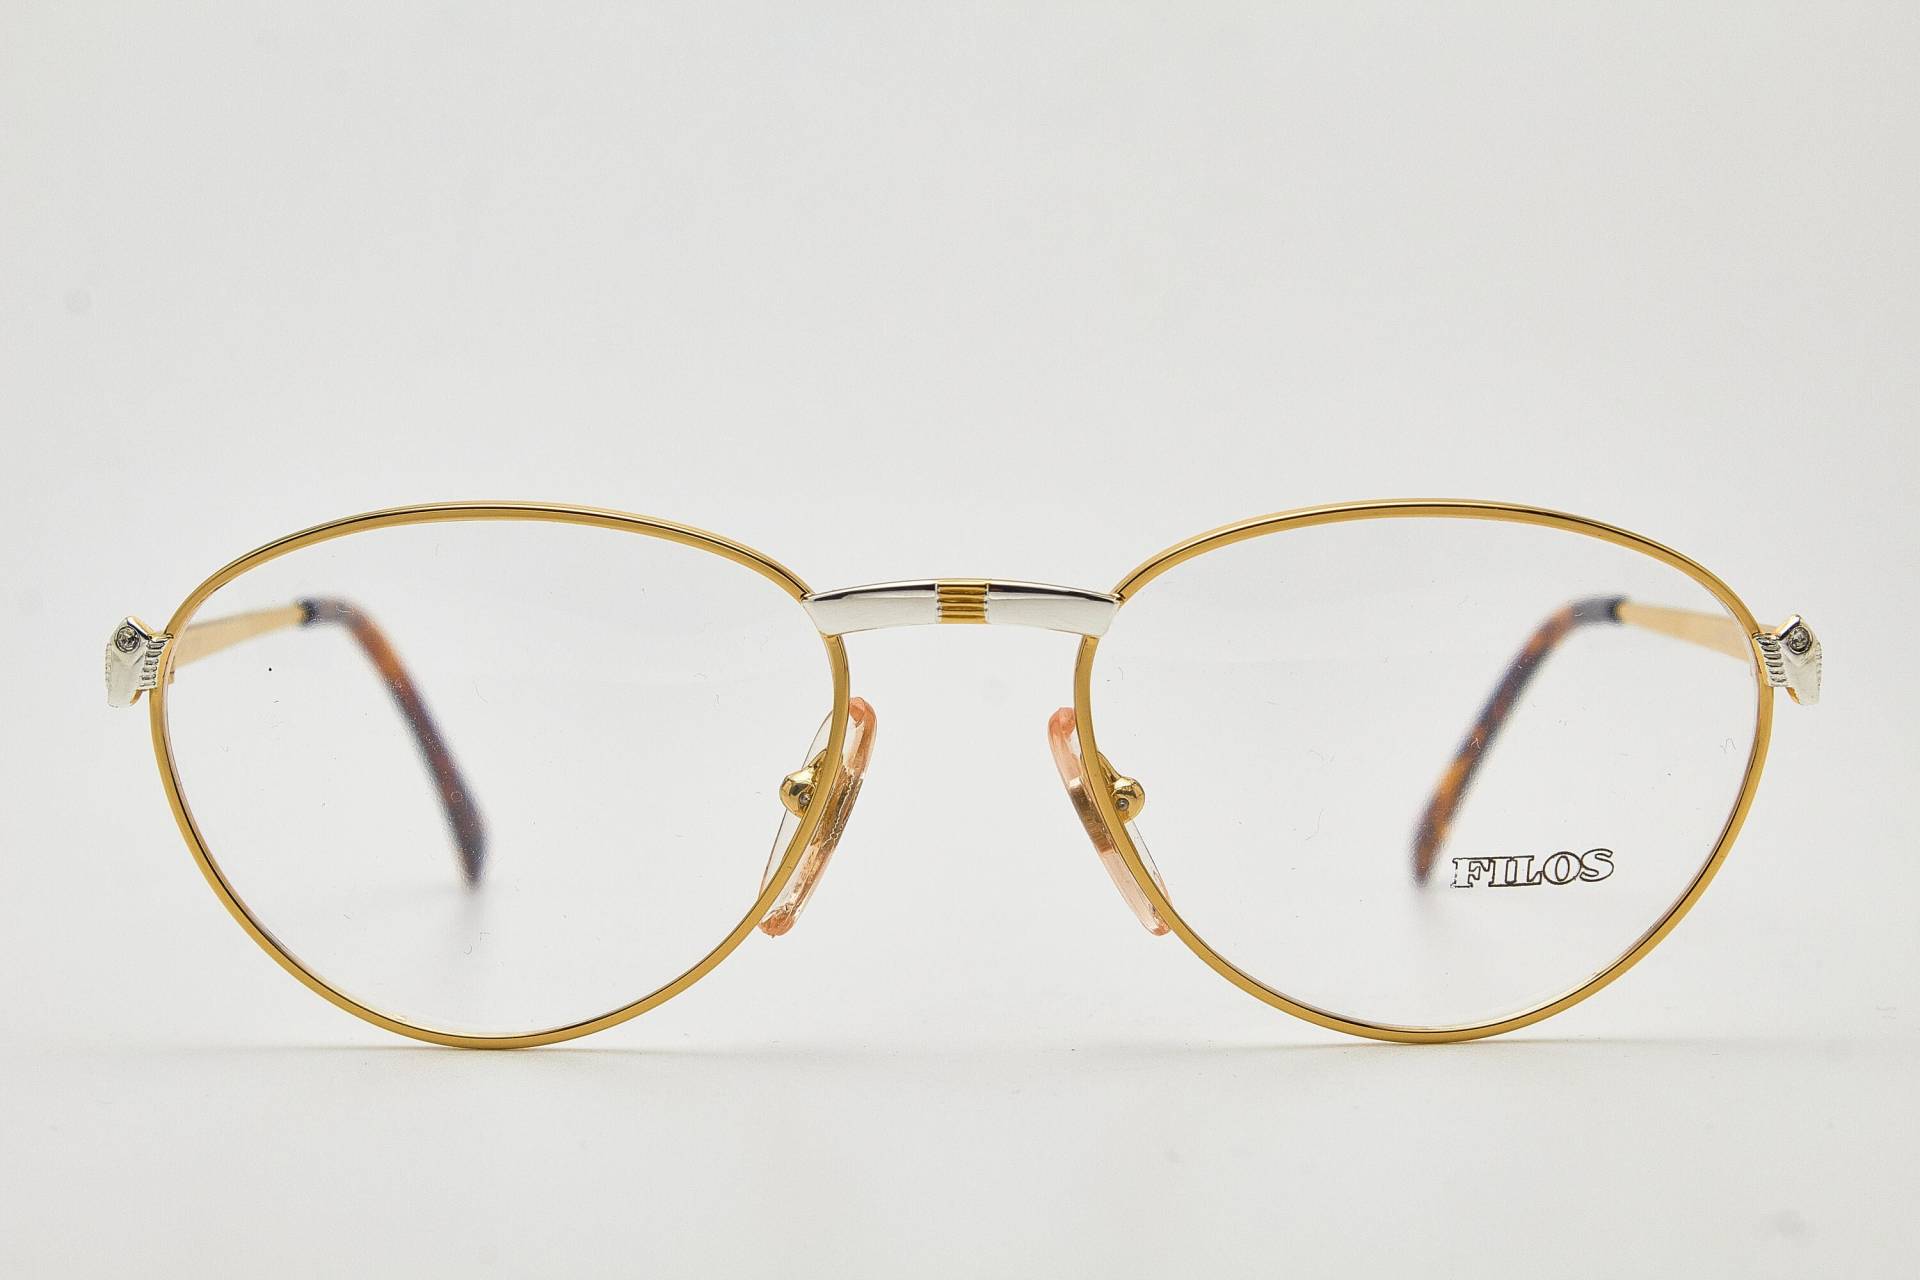 Filos 6167 Gold Ovale Brille-Goldene Brille-Ovale Brille-Vintage Brille-Für Goldene Sonnenbrillen-Ovale Brille 1980Er Jahre-Gold Brillen von VintageGlassesVault